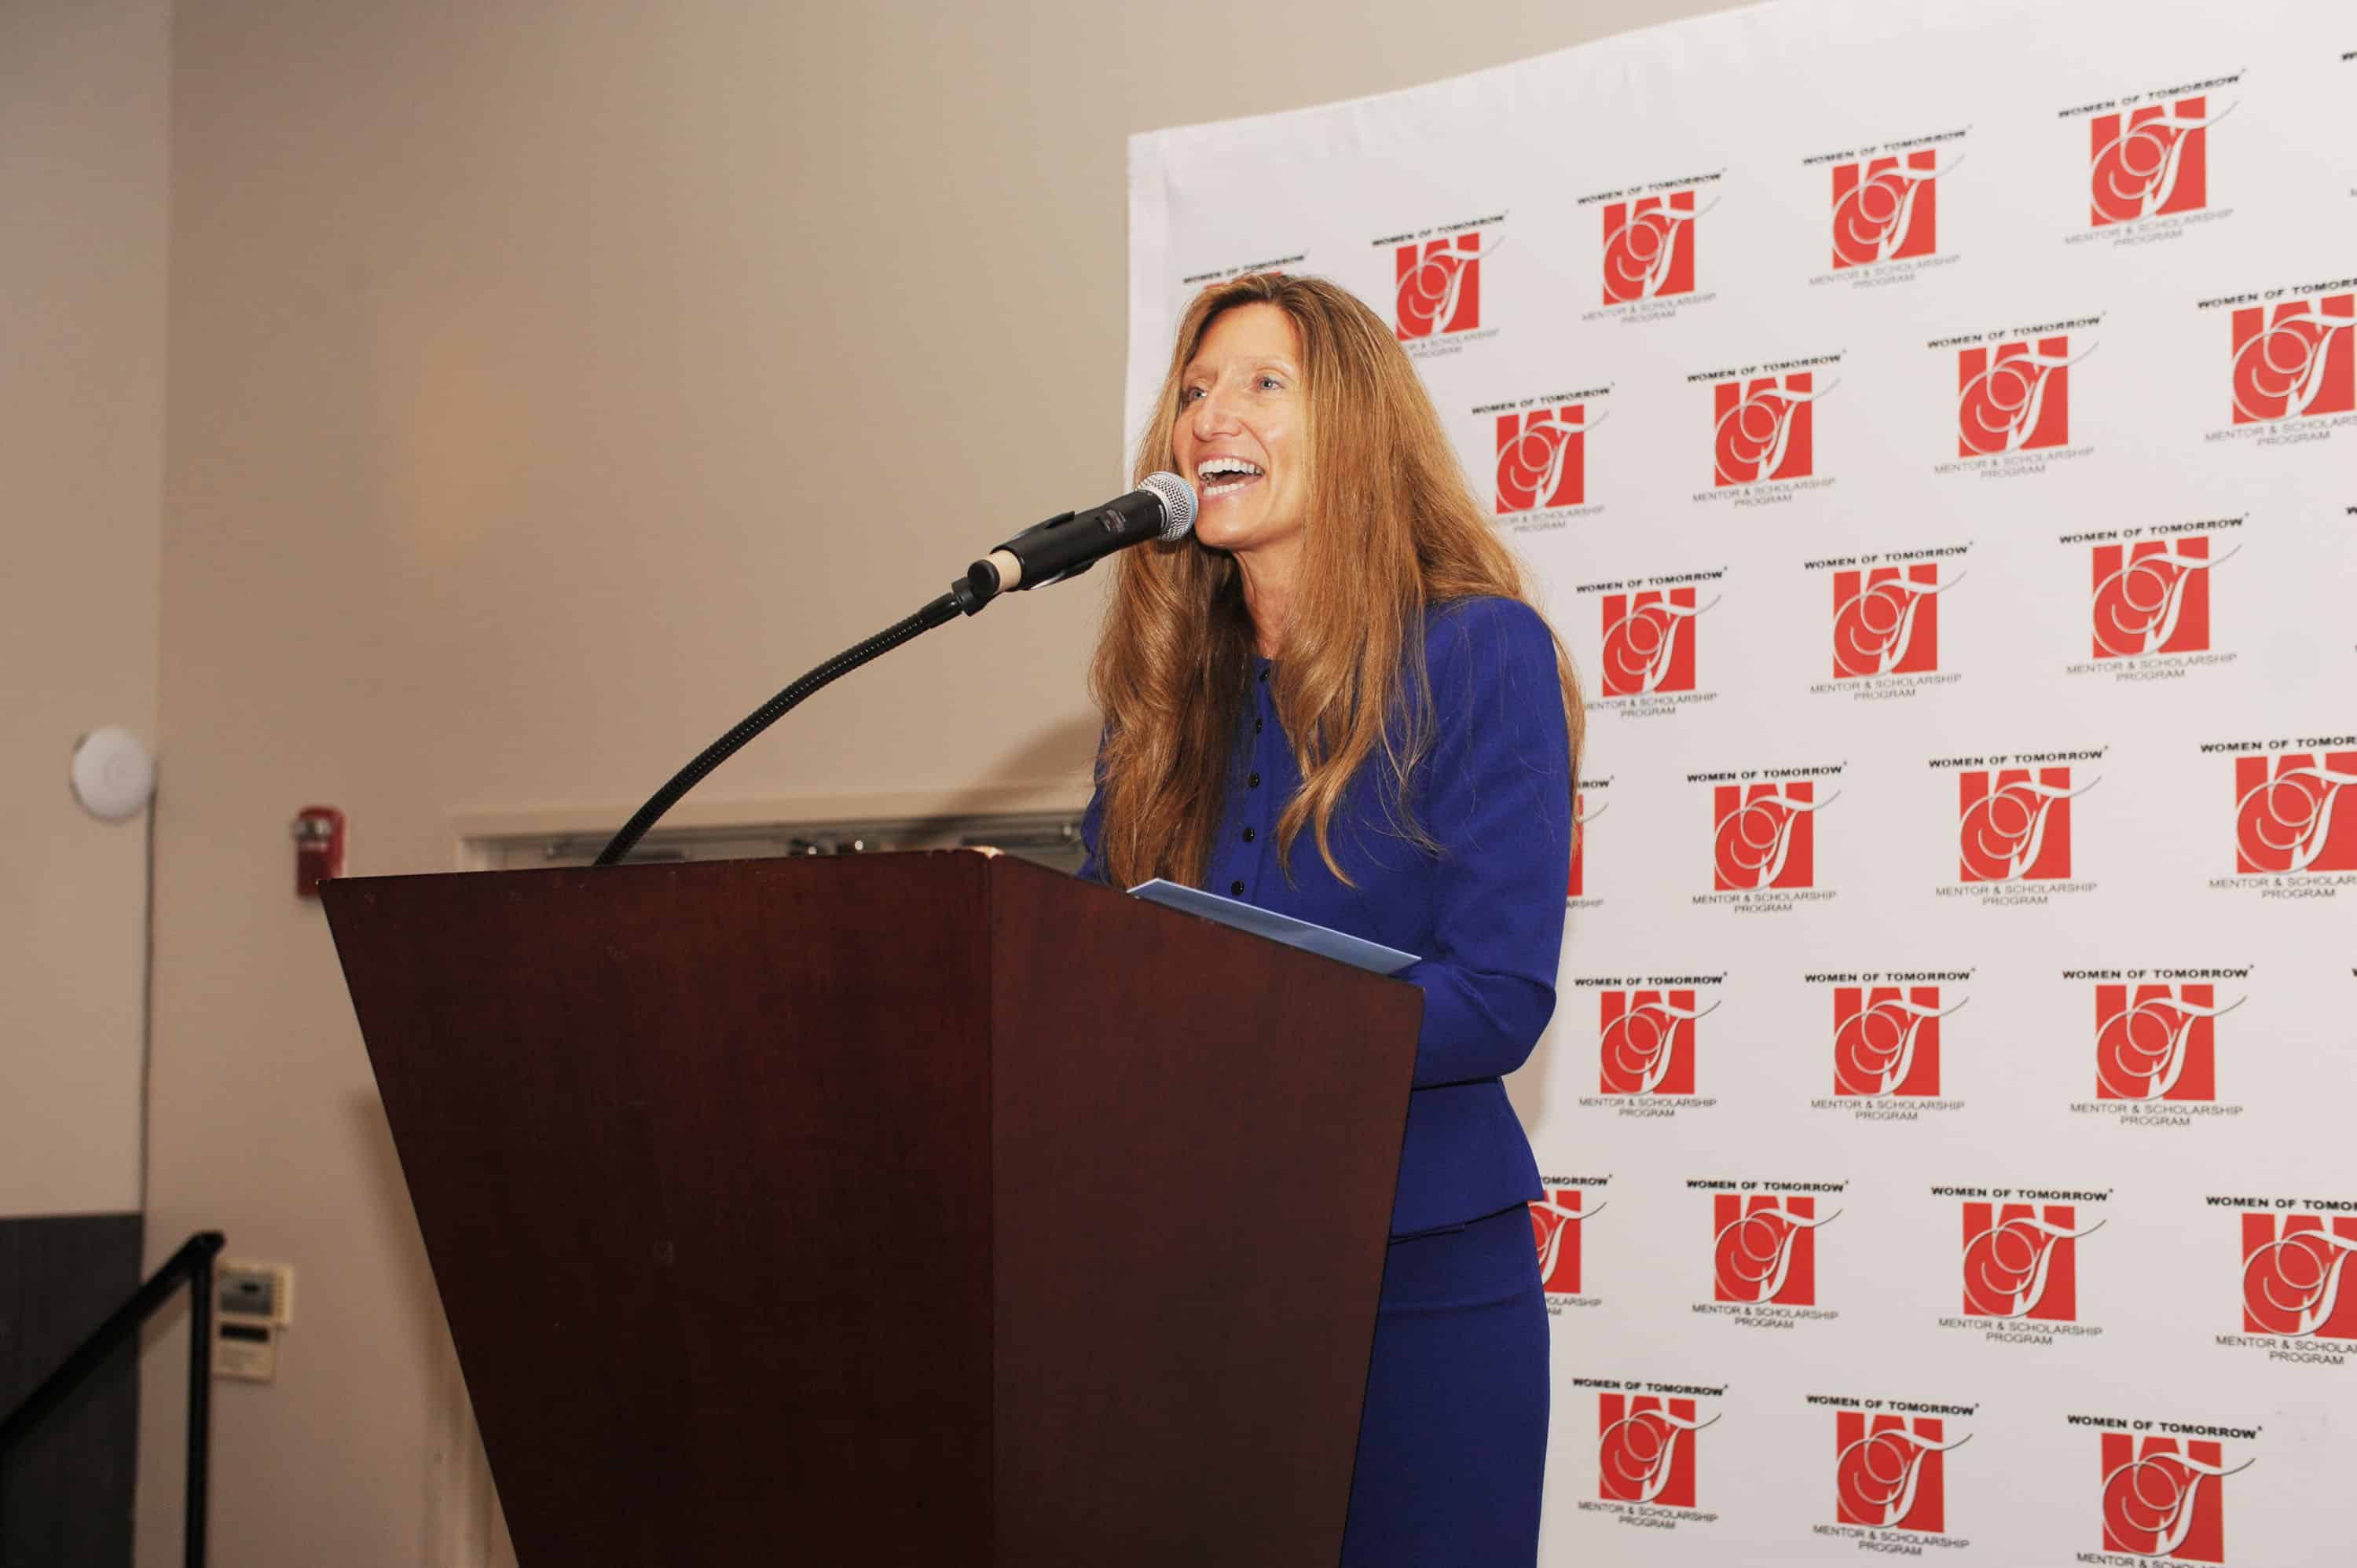 Keiser University Miami President Gives Keynote Address at Women of Tomorrow Luncheon